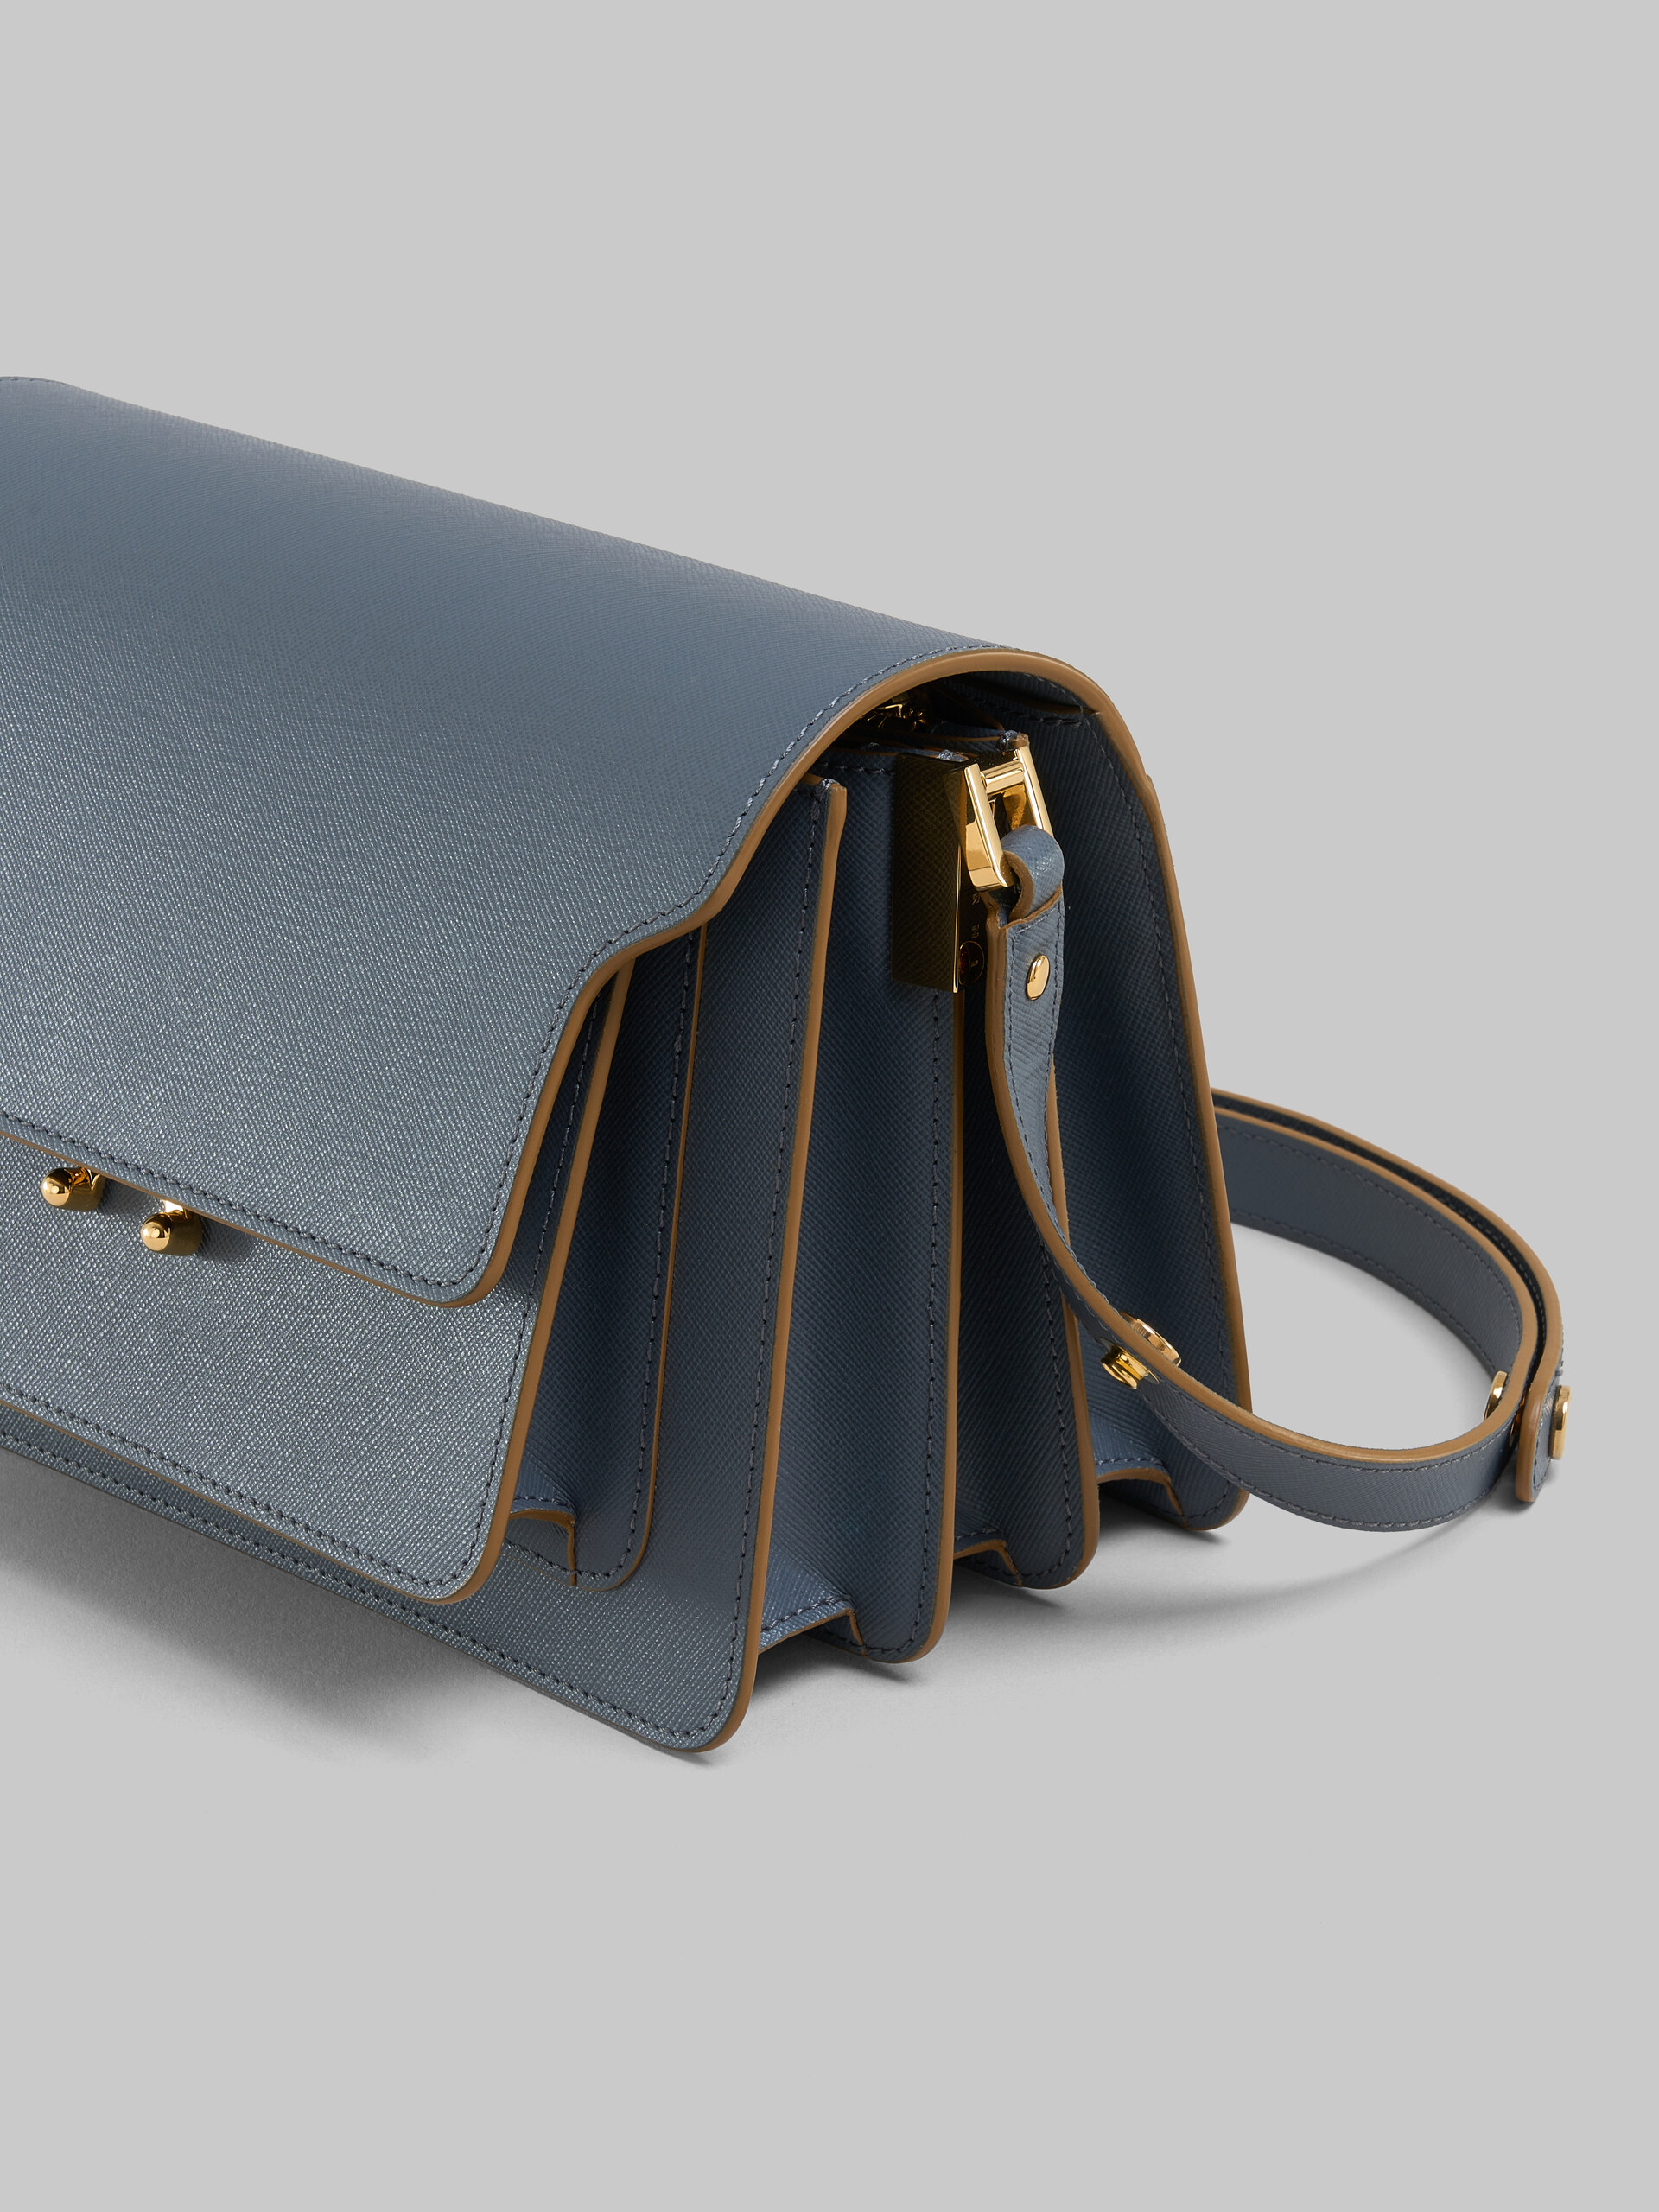 MARNI: Trunk saffiano leather bag - Camel  Marni crossbody bags  SBMPN09N01LV520 online at